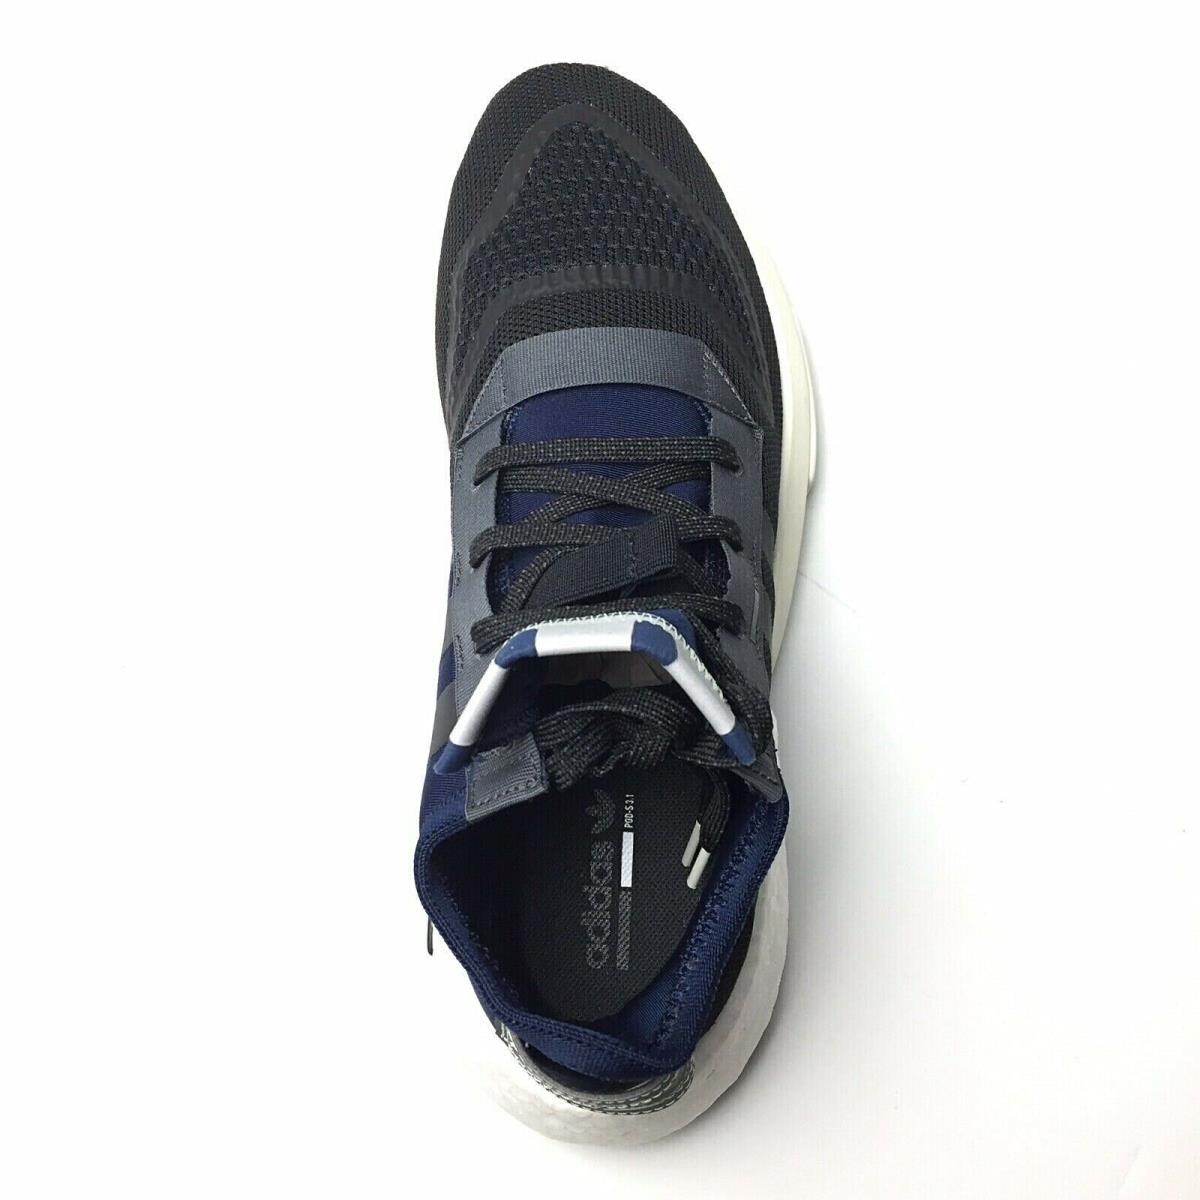 Adidas shoes  - Black-Blue 4